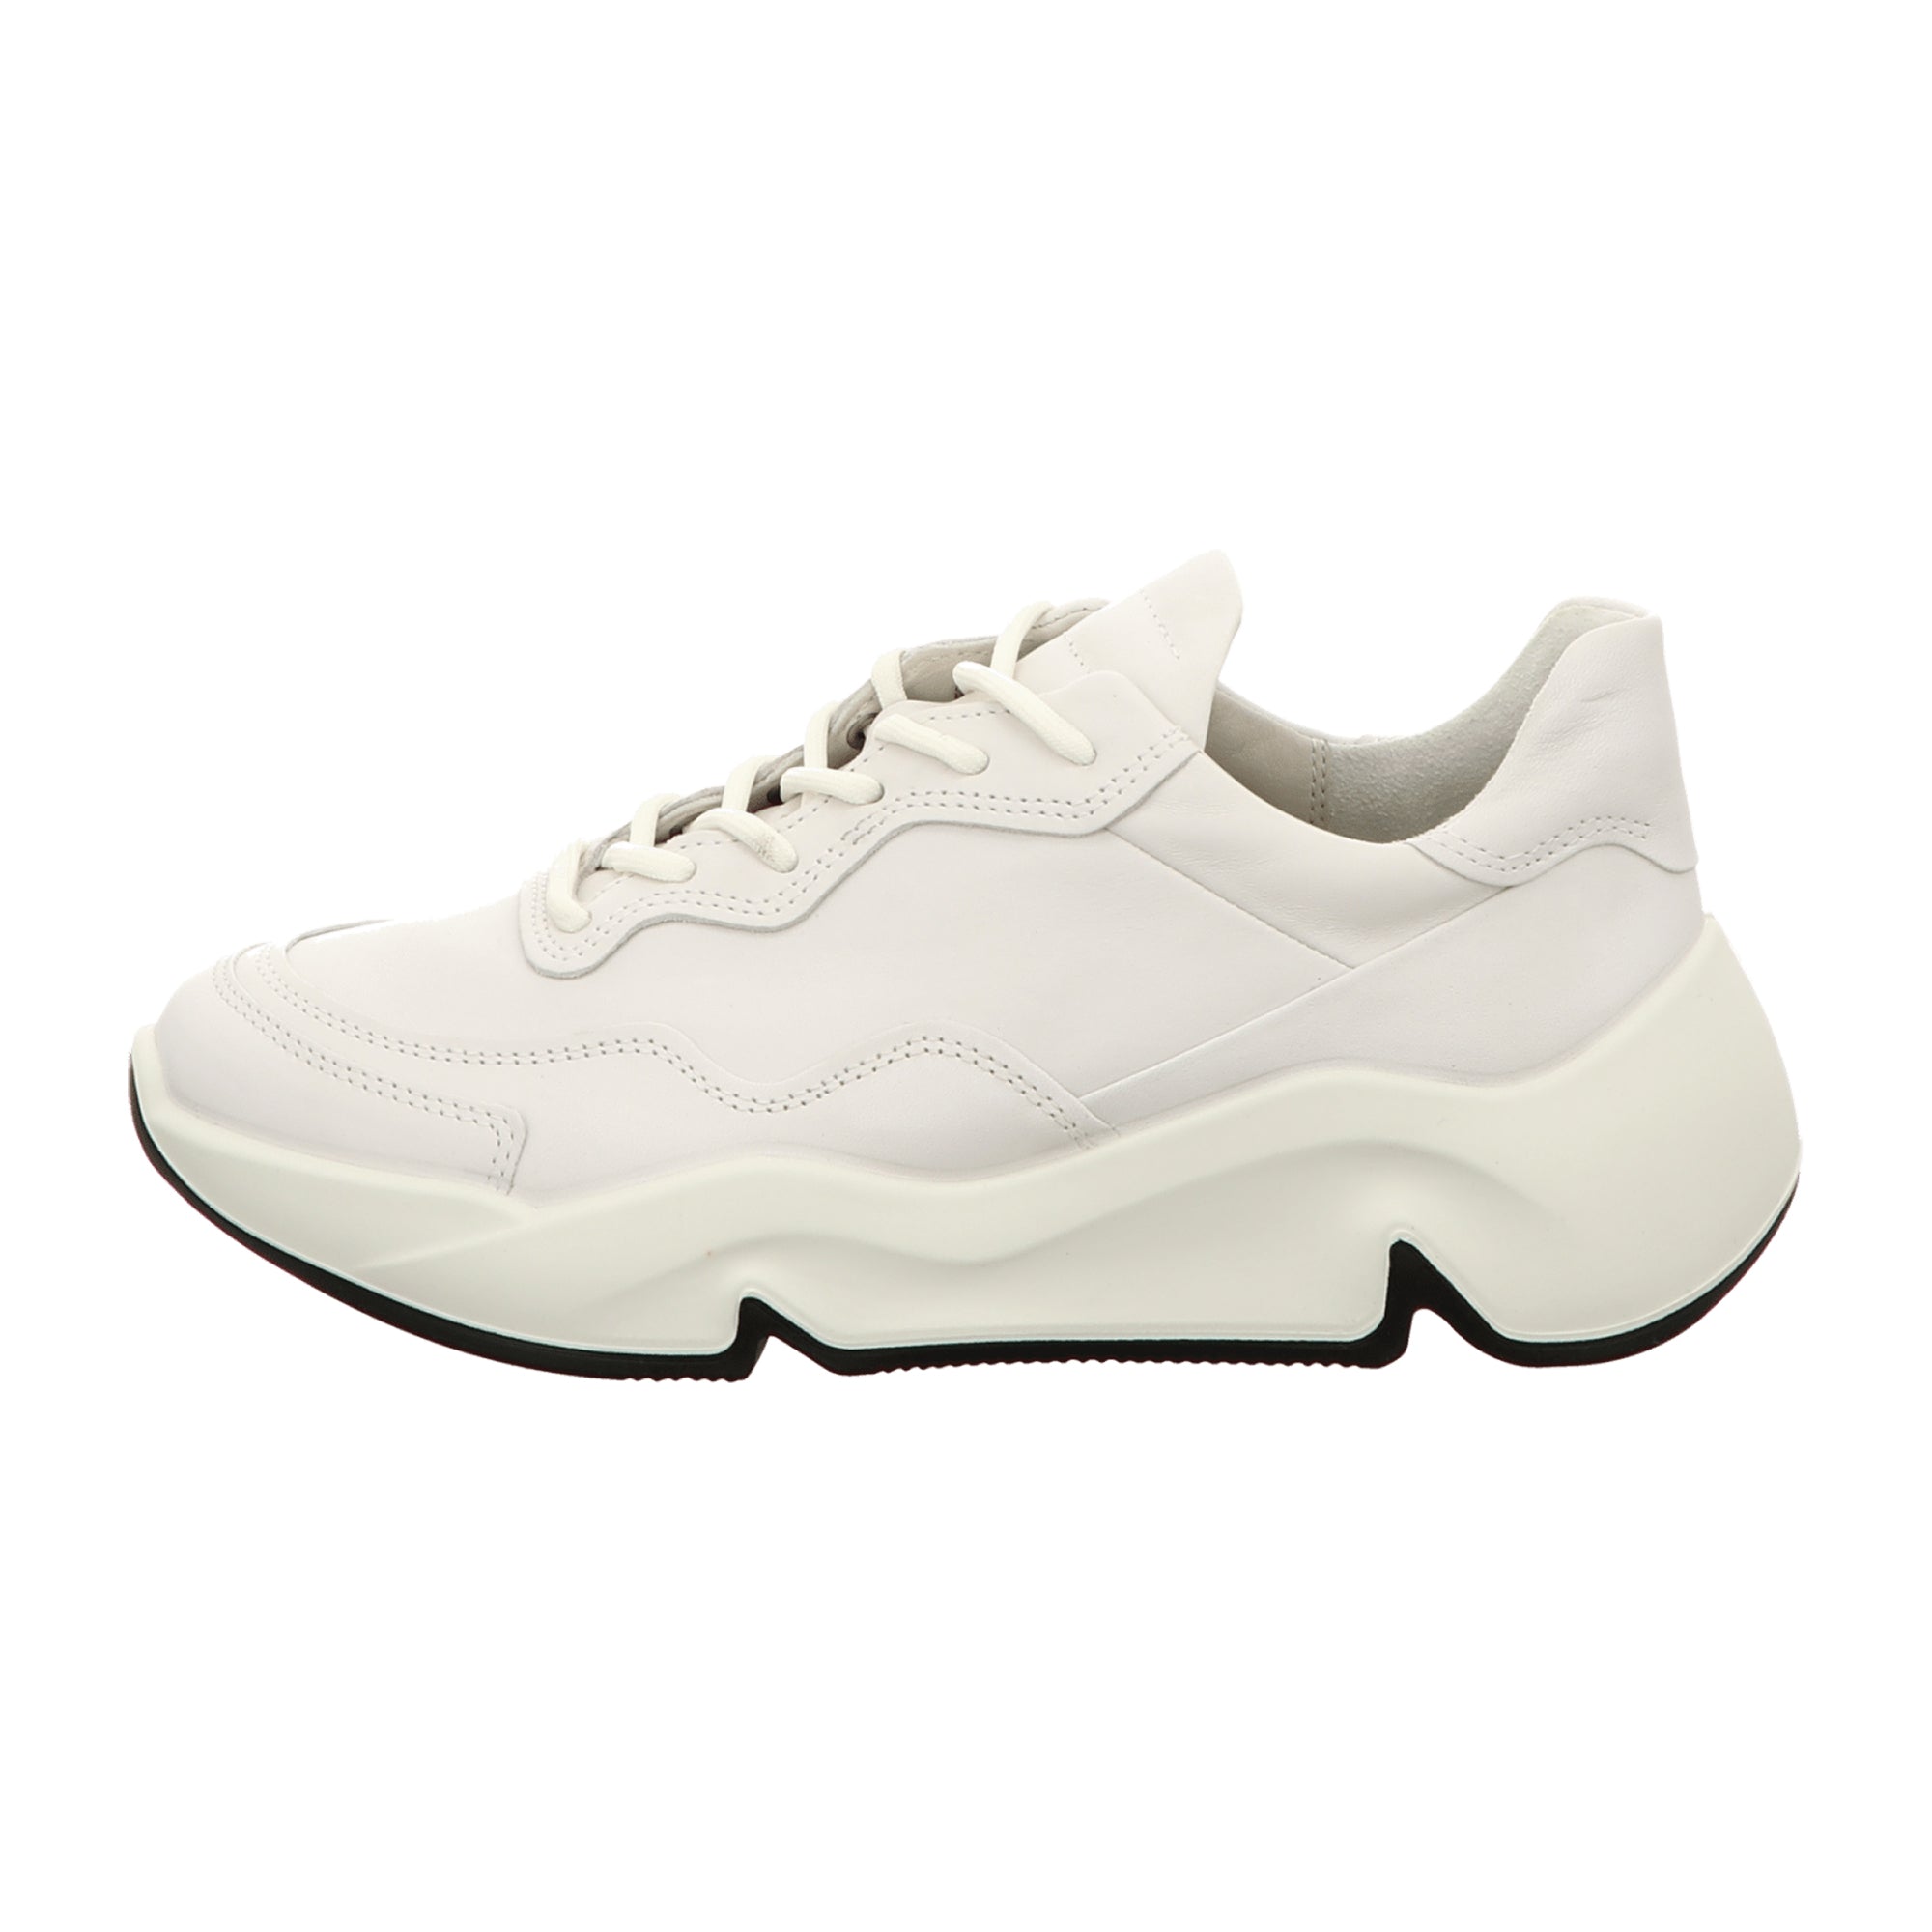 Ecco Women's Comfort Sneakers White - Stylish & Durable